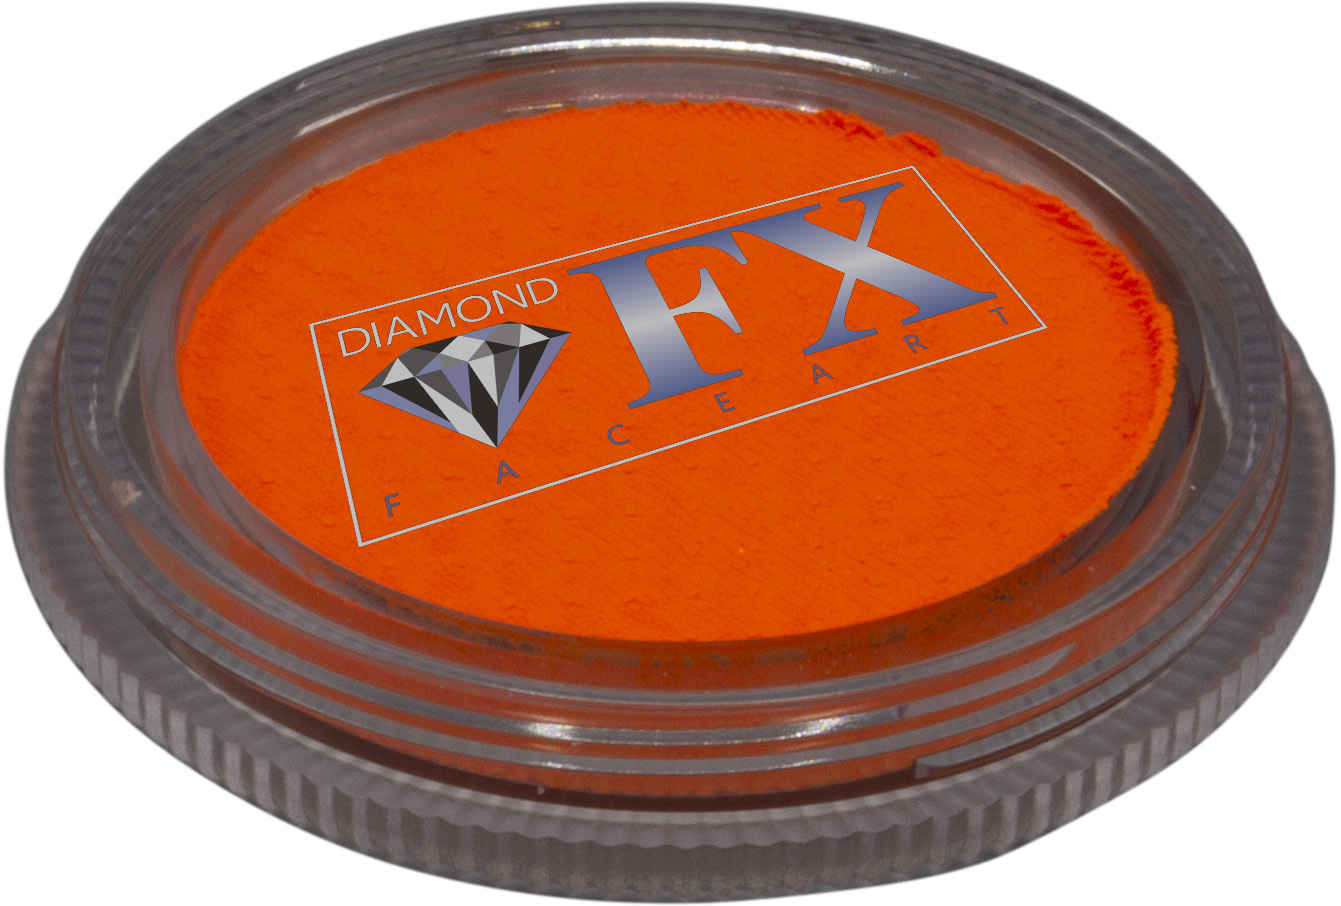 Diamond FX Orange Neon 30g - Small Image